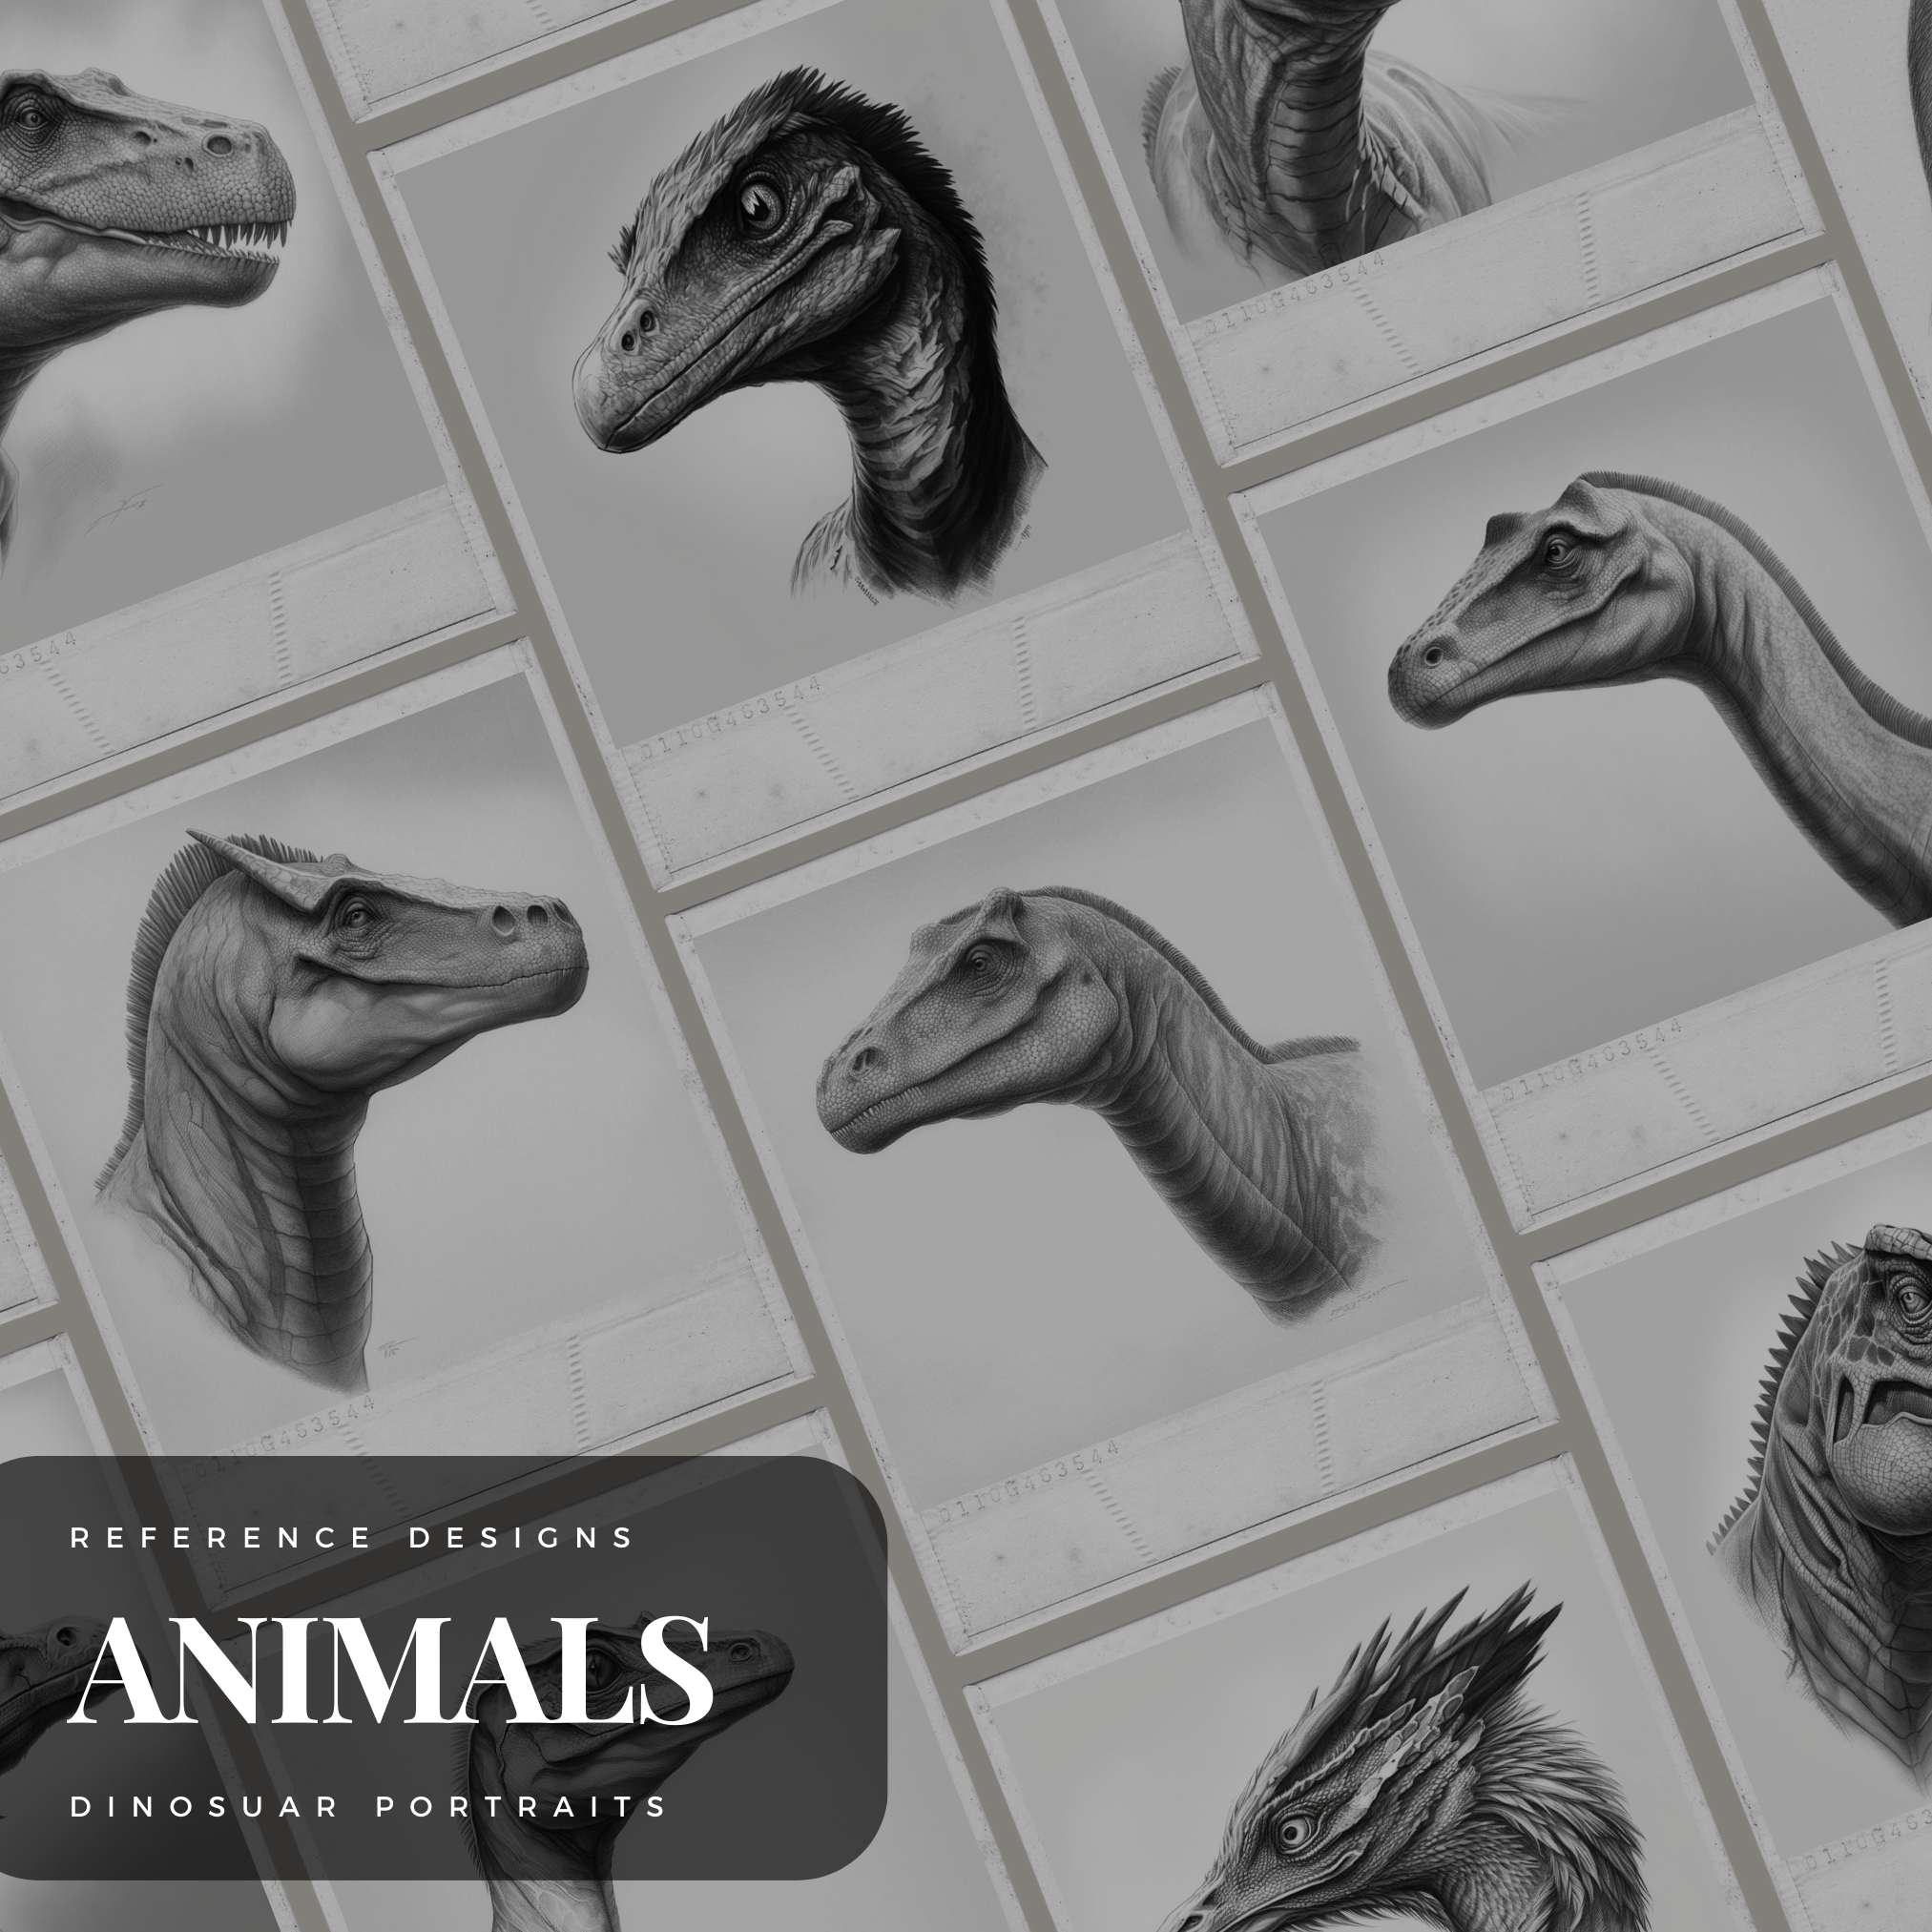 Dinosaurs Digital Reference Design Collection: 100 Procreate & Sketchbook Images